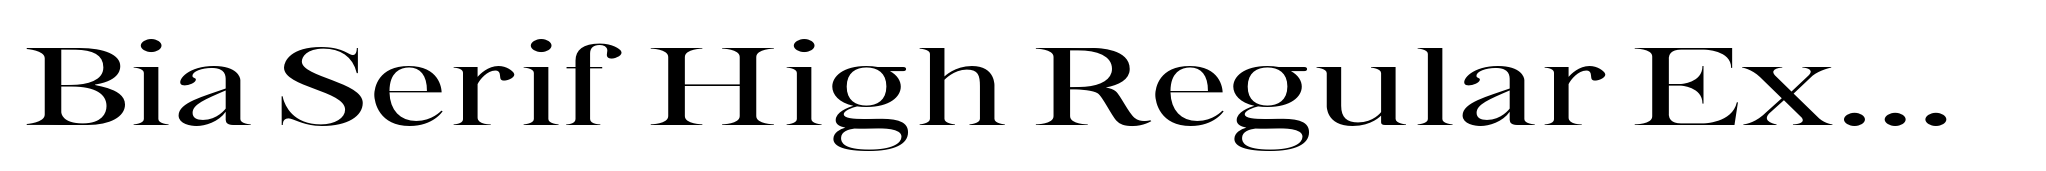 Bia Serif High Regular Expanded image